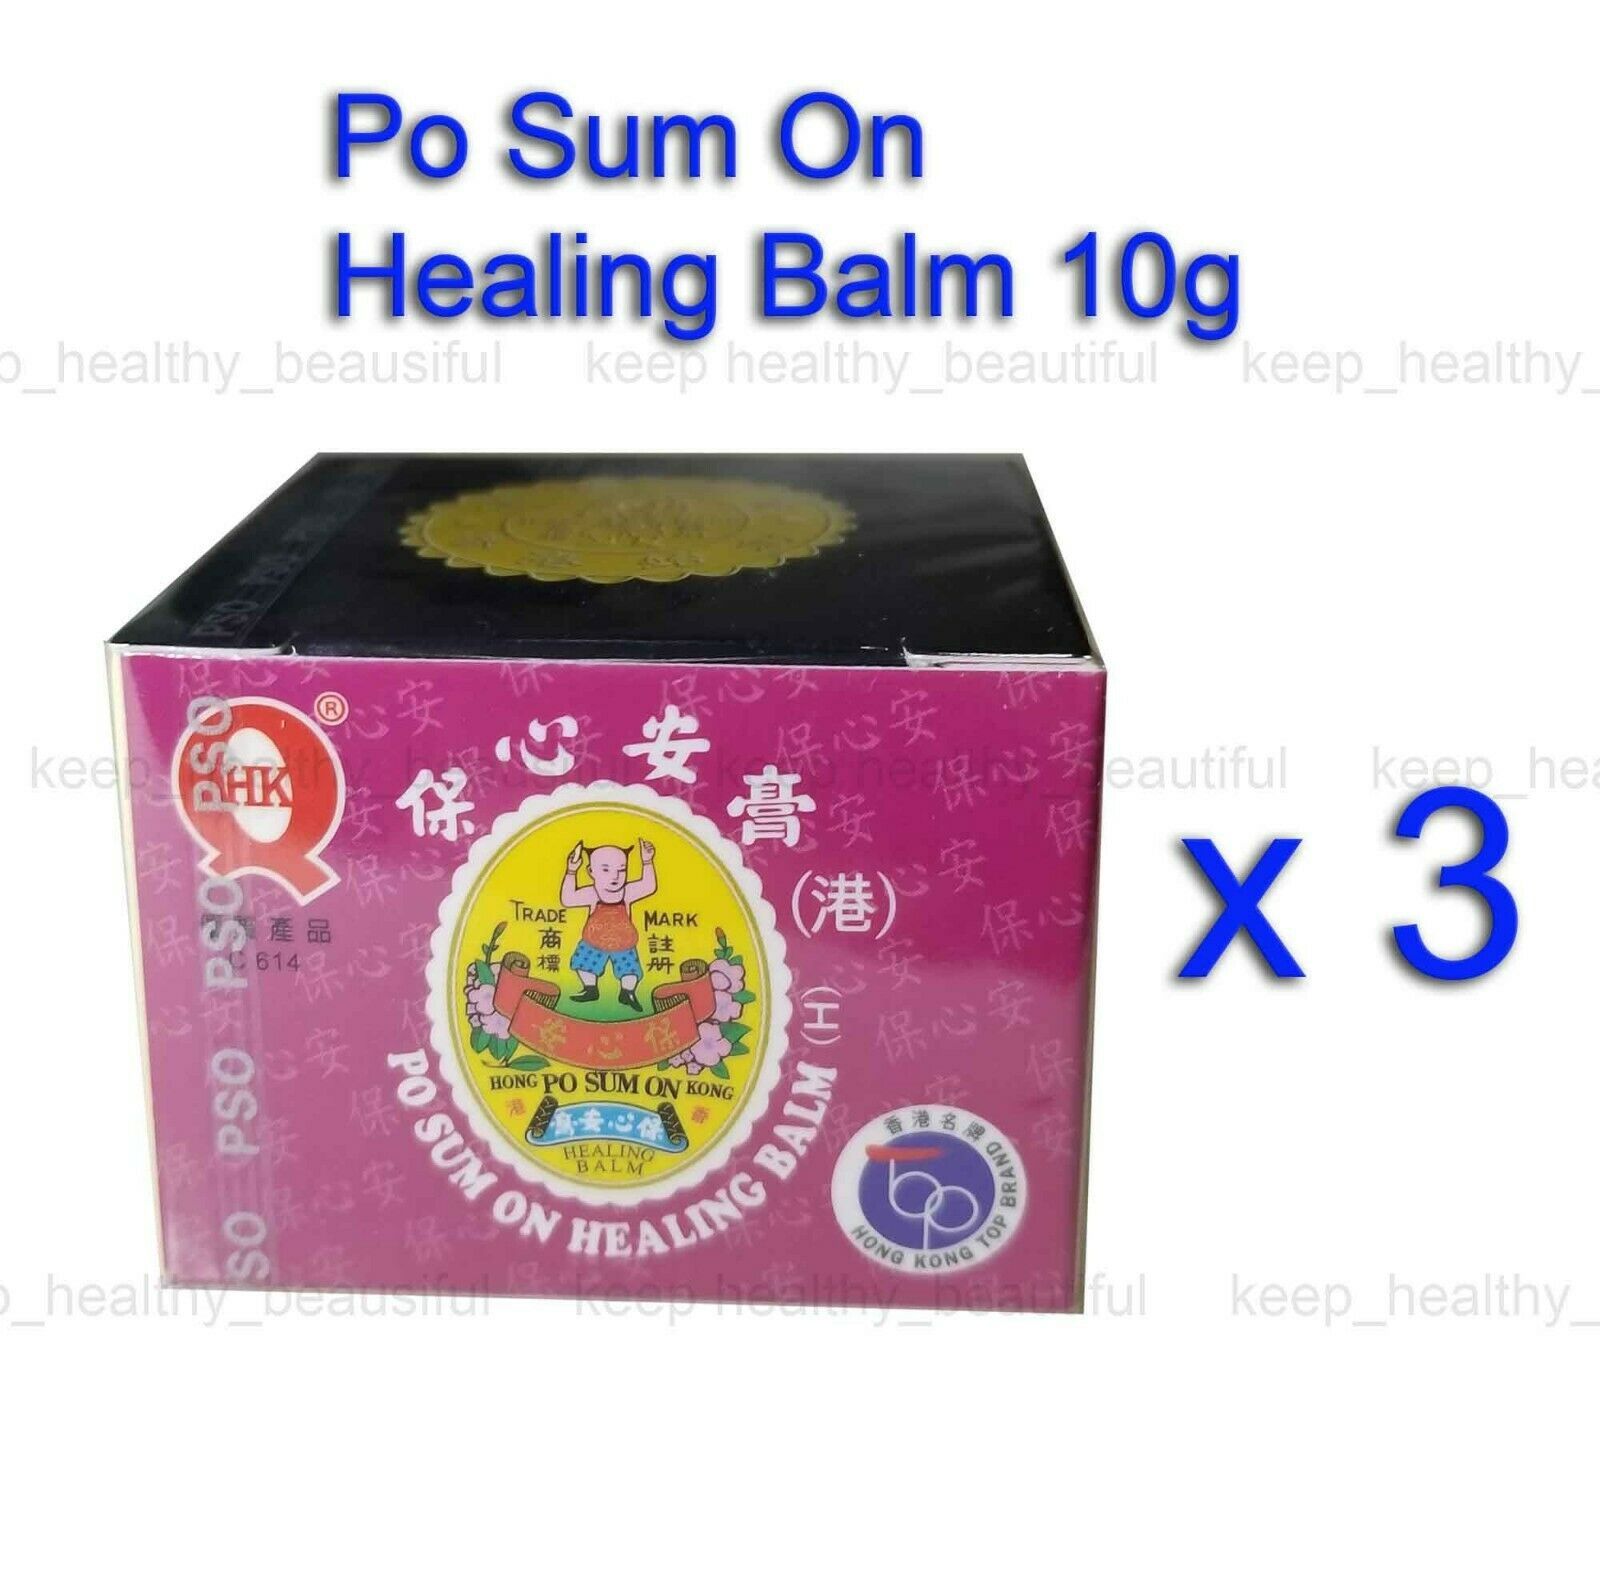 3 x 10g Po Sum On Healing Balm Headache Dizziness Muscular Pain Insect Bites - $22.90